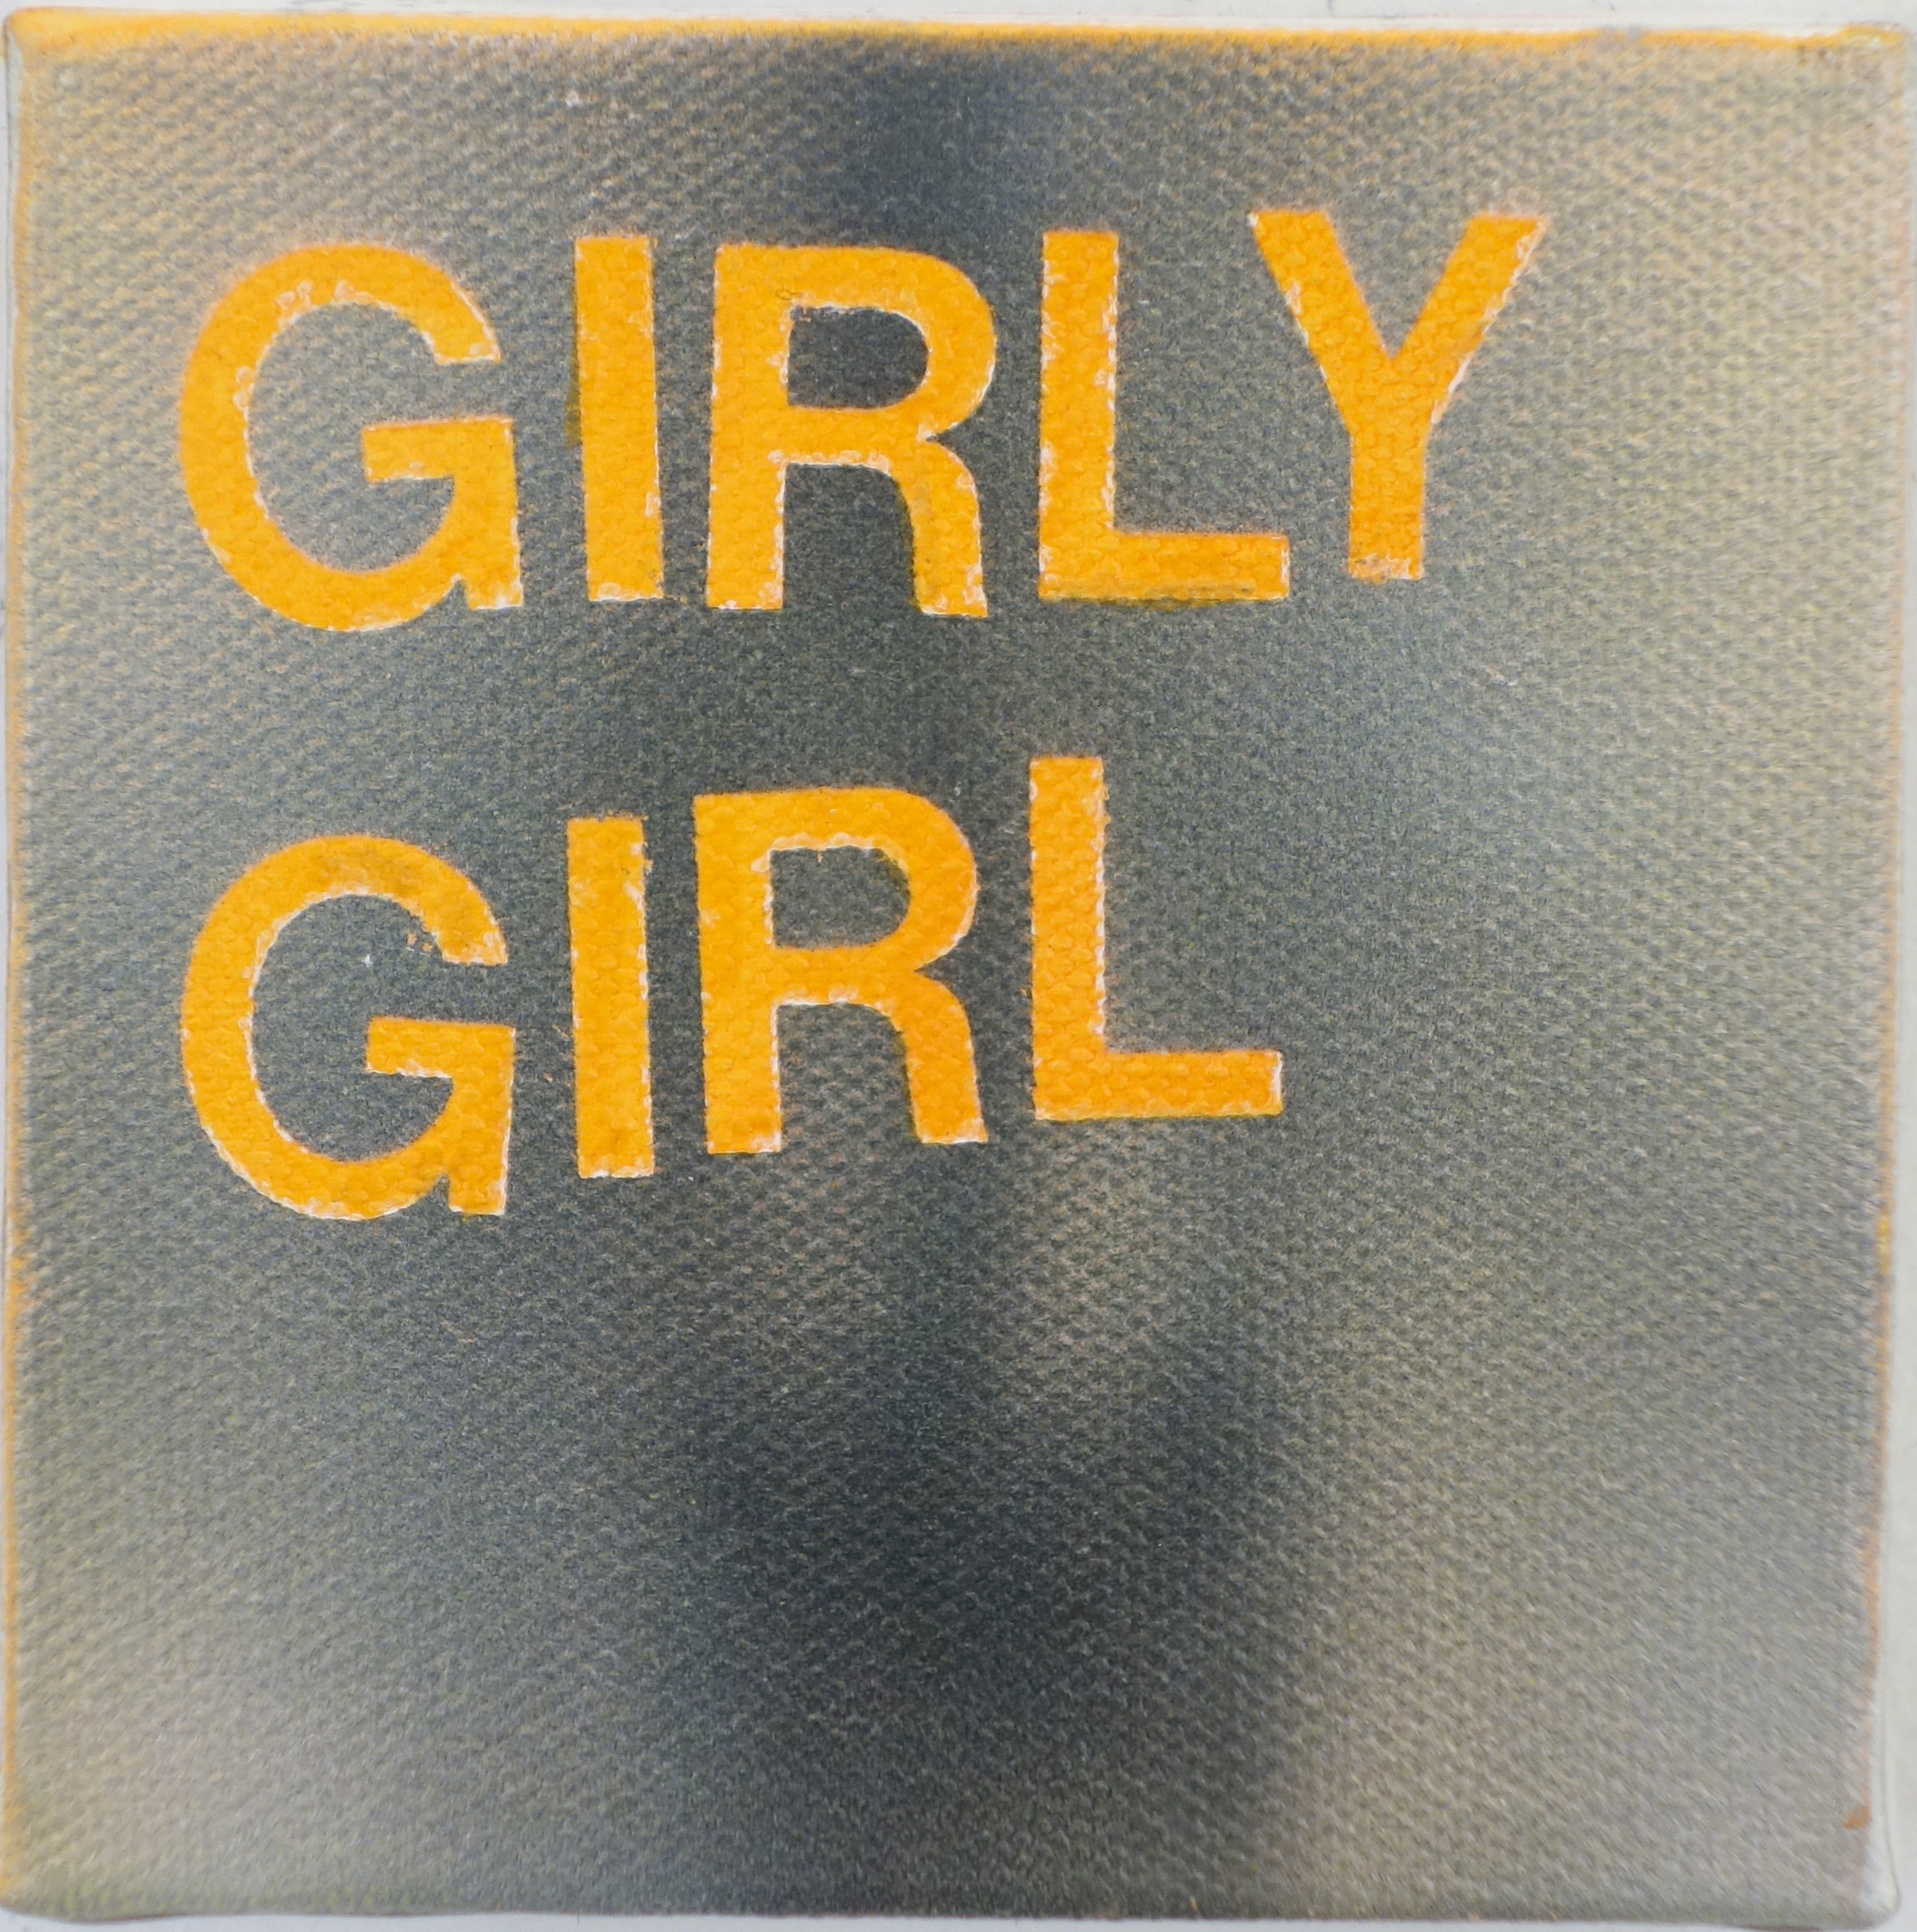 girly girl 4x4%22 2013.jpg